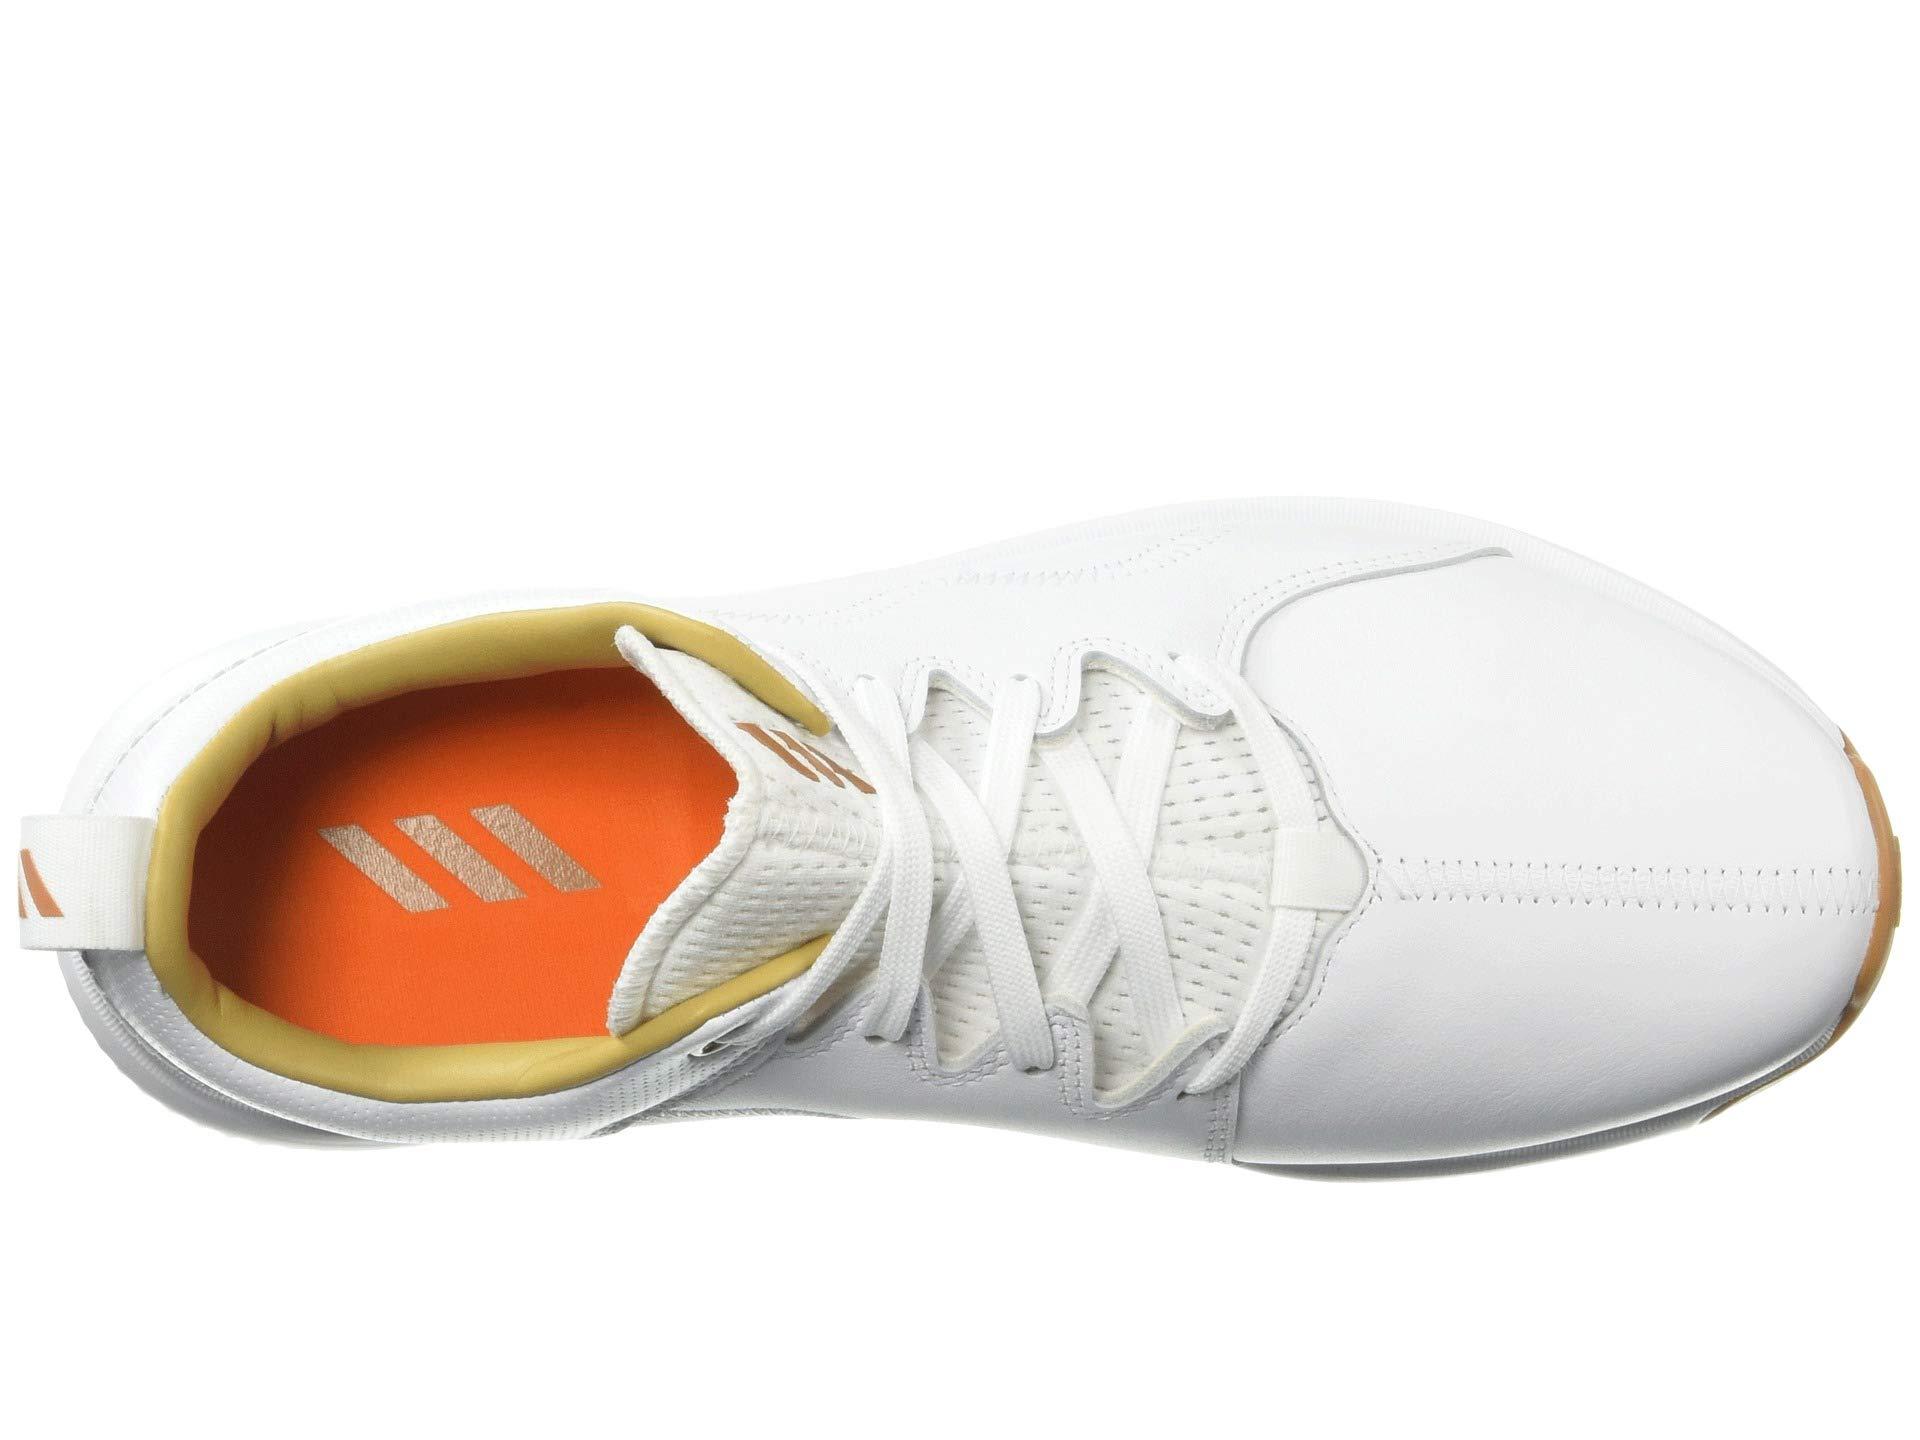 adidas adicross ppf golf shoes white